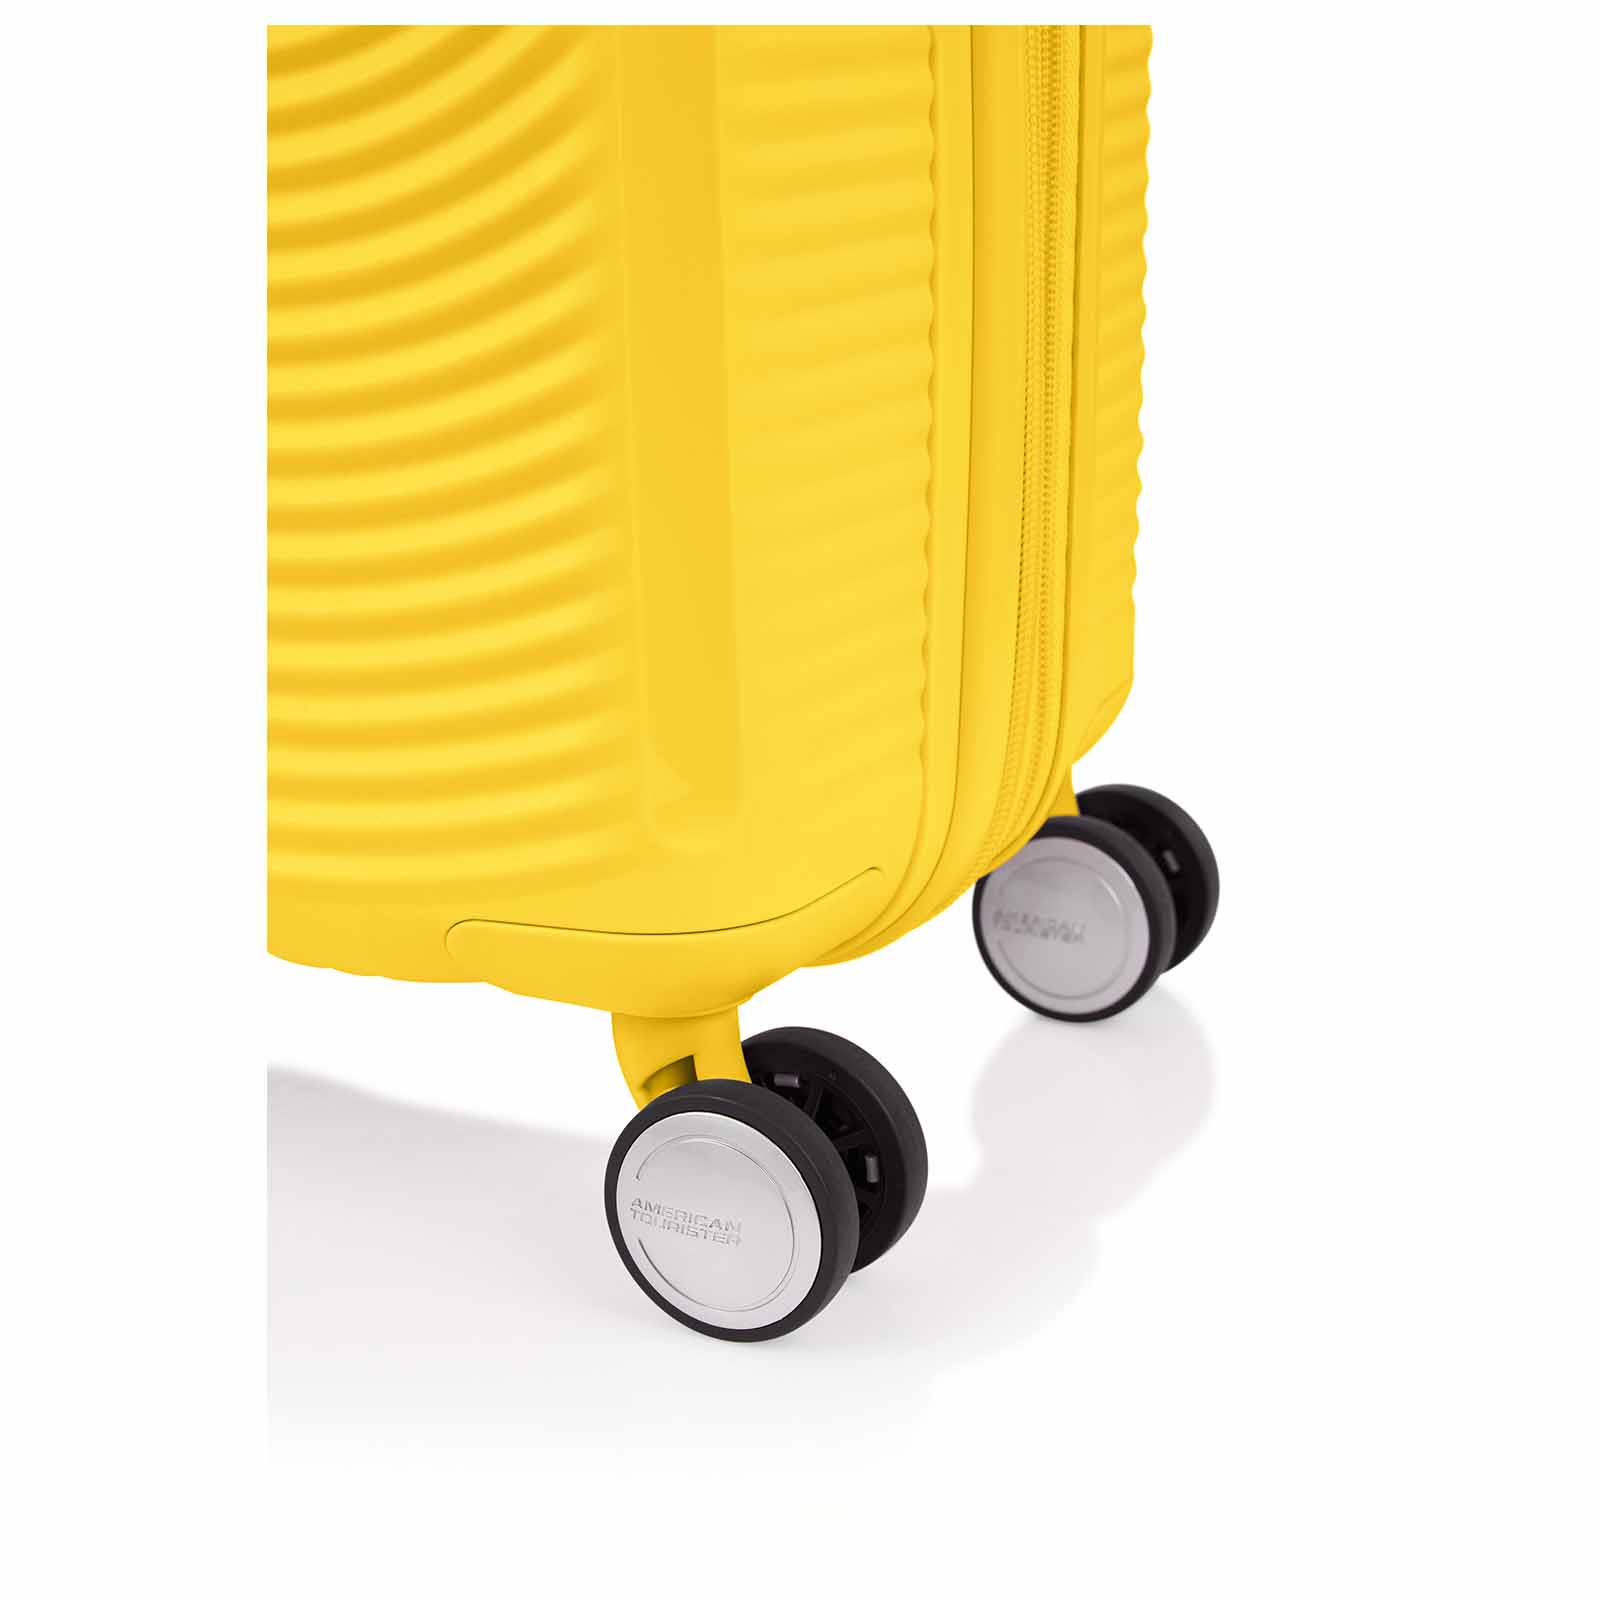 American-Tourister-Curio-2-69cm-Suitcase-Golden-Yellow-Wheels